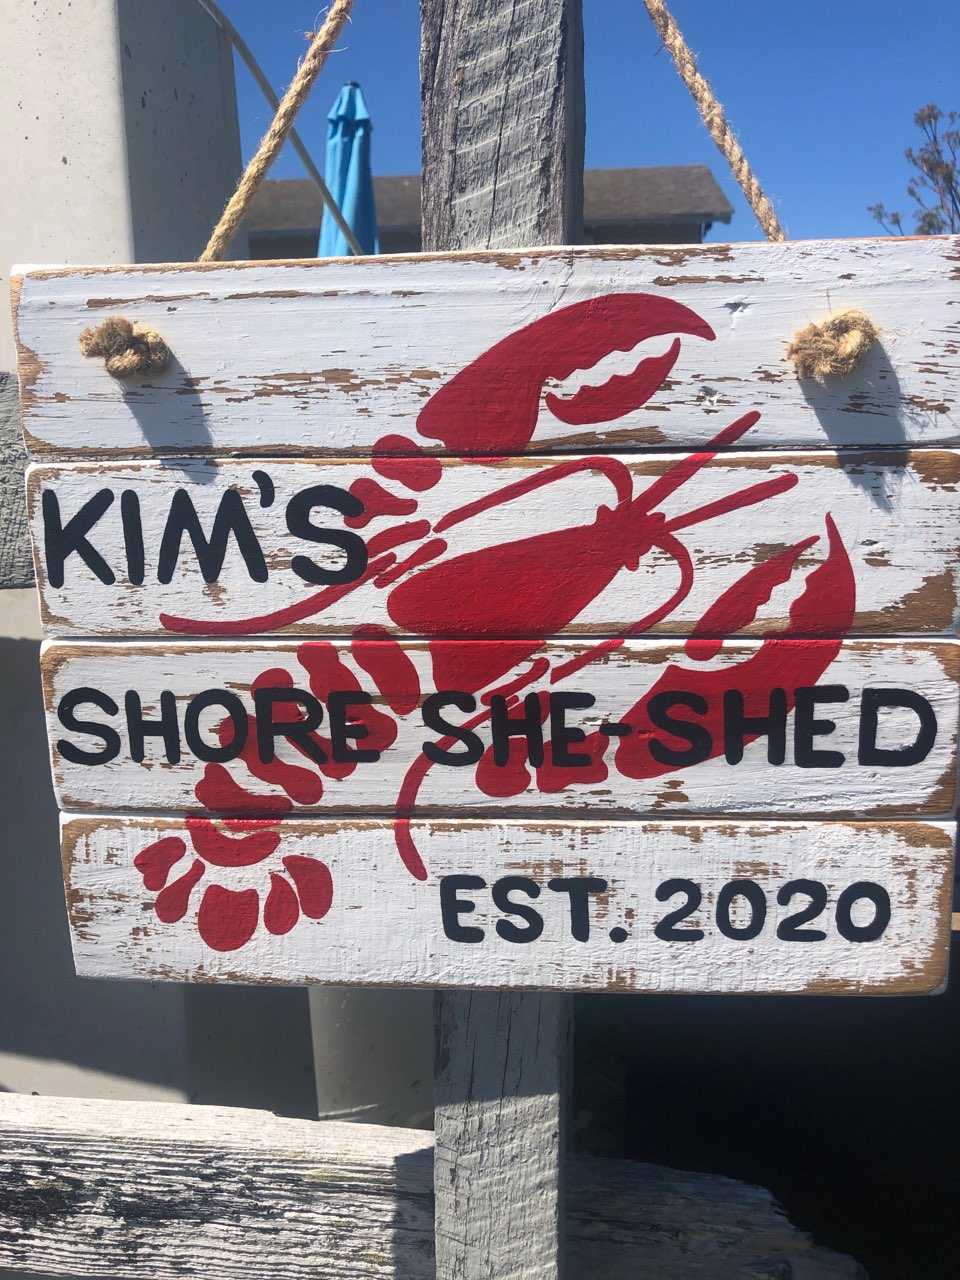 Kims Shore She Shed